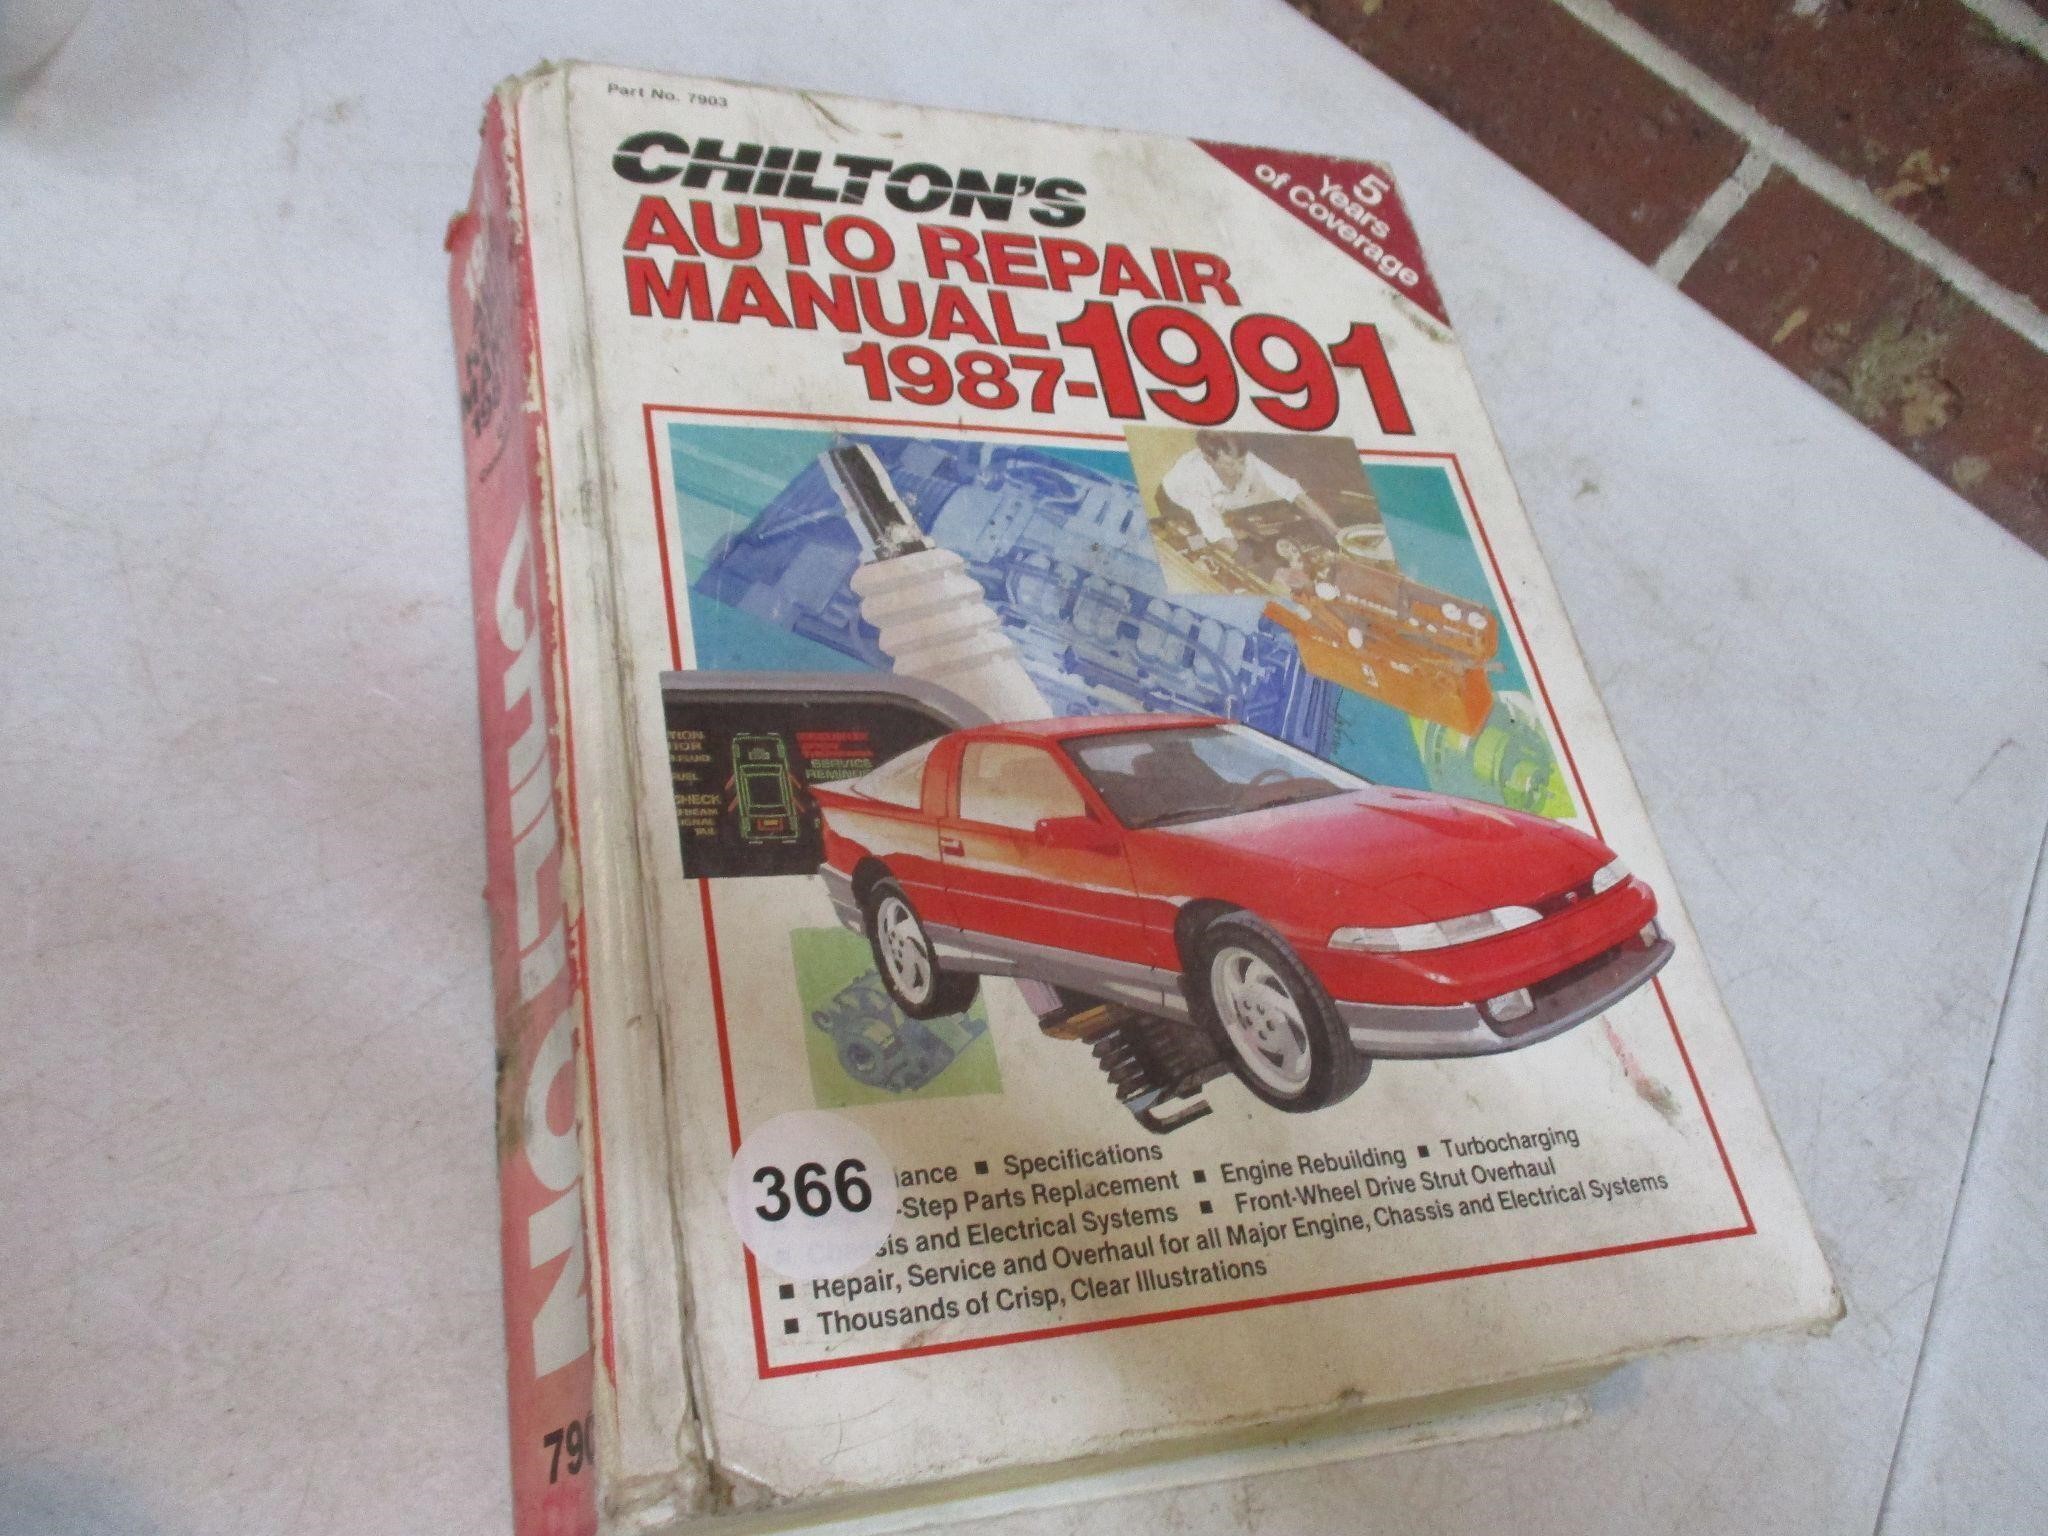 Chilton's Auto Repair Manual 1987-1991